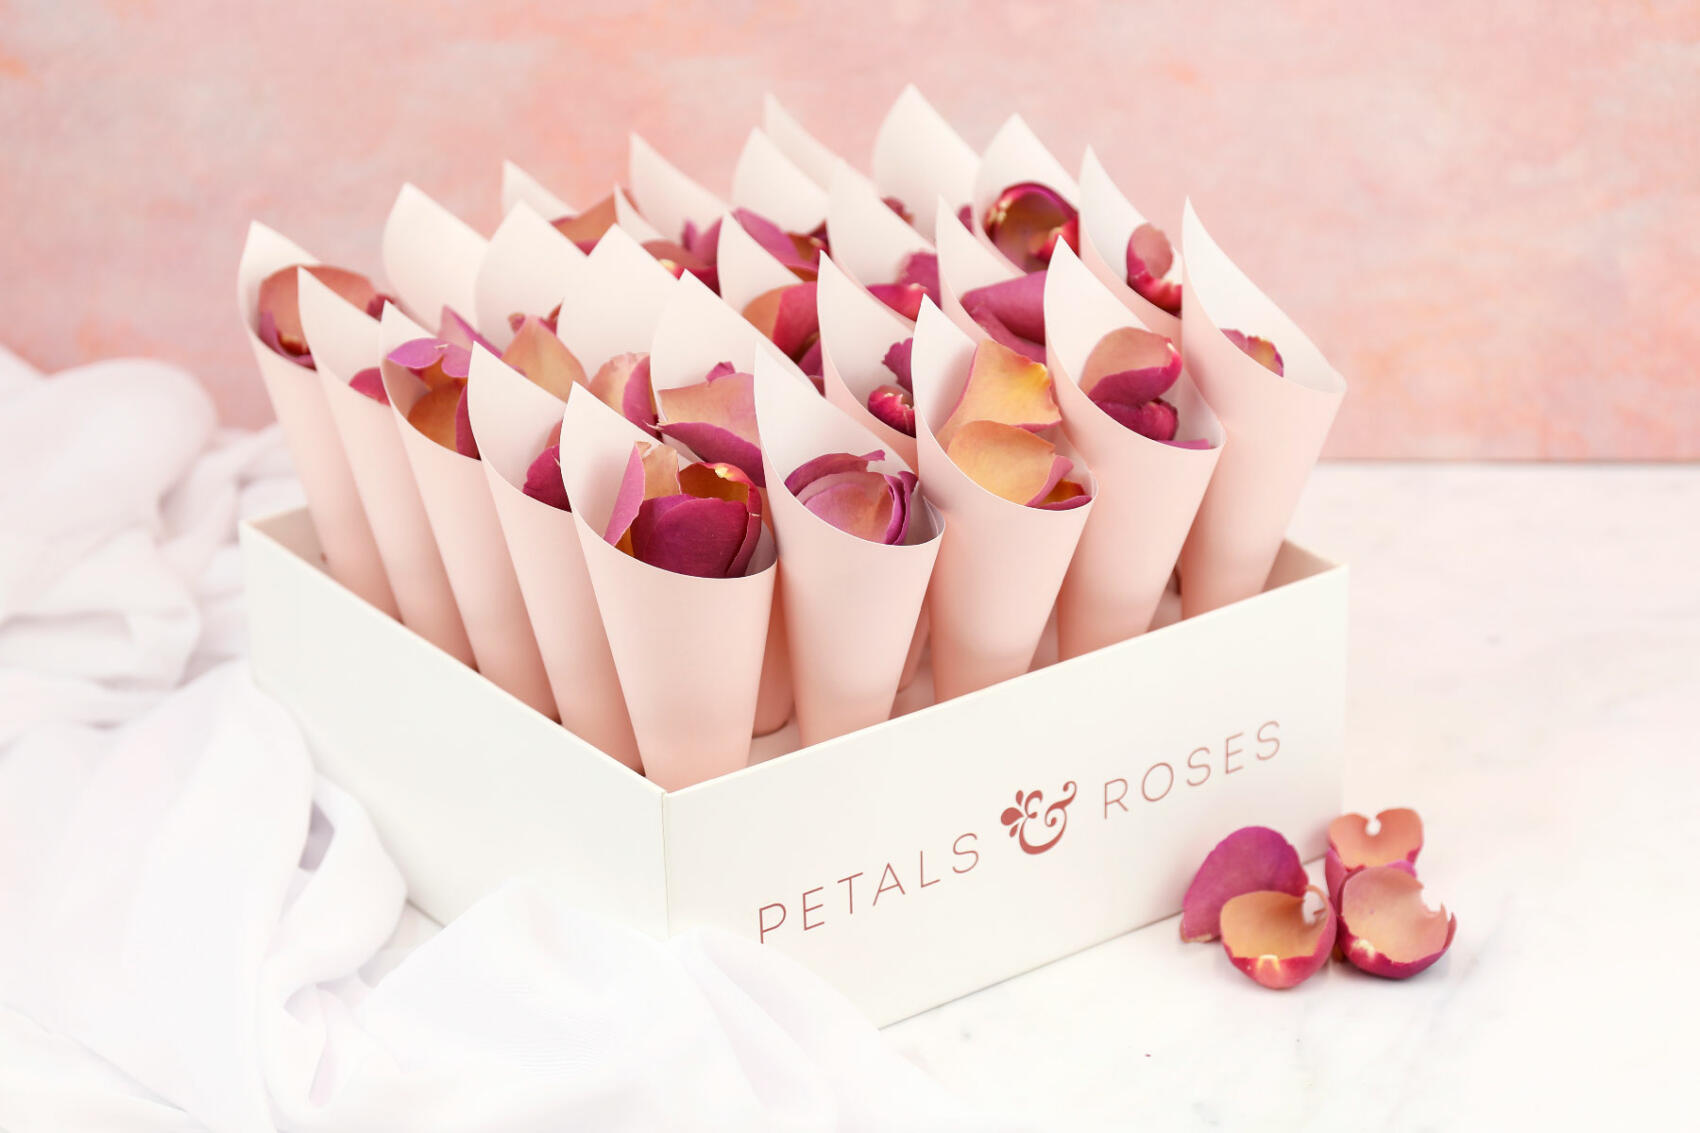 Petlas & Roses - Biodegradable Dried Rose Petals for Luxury Petal Confetti